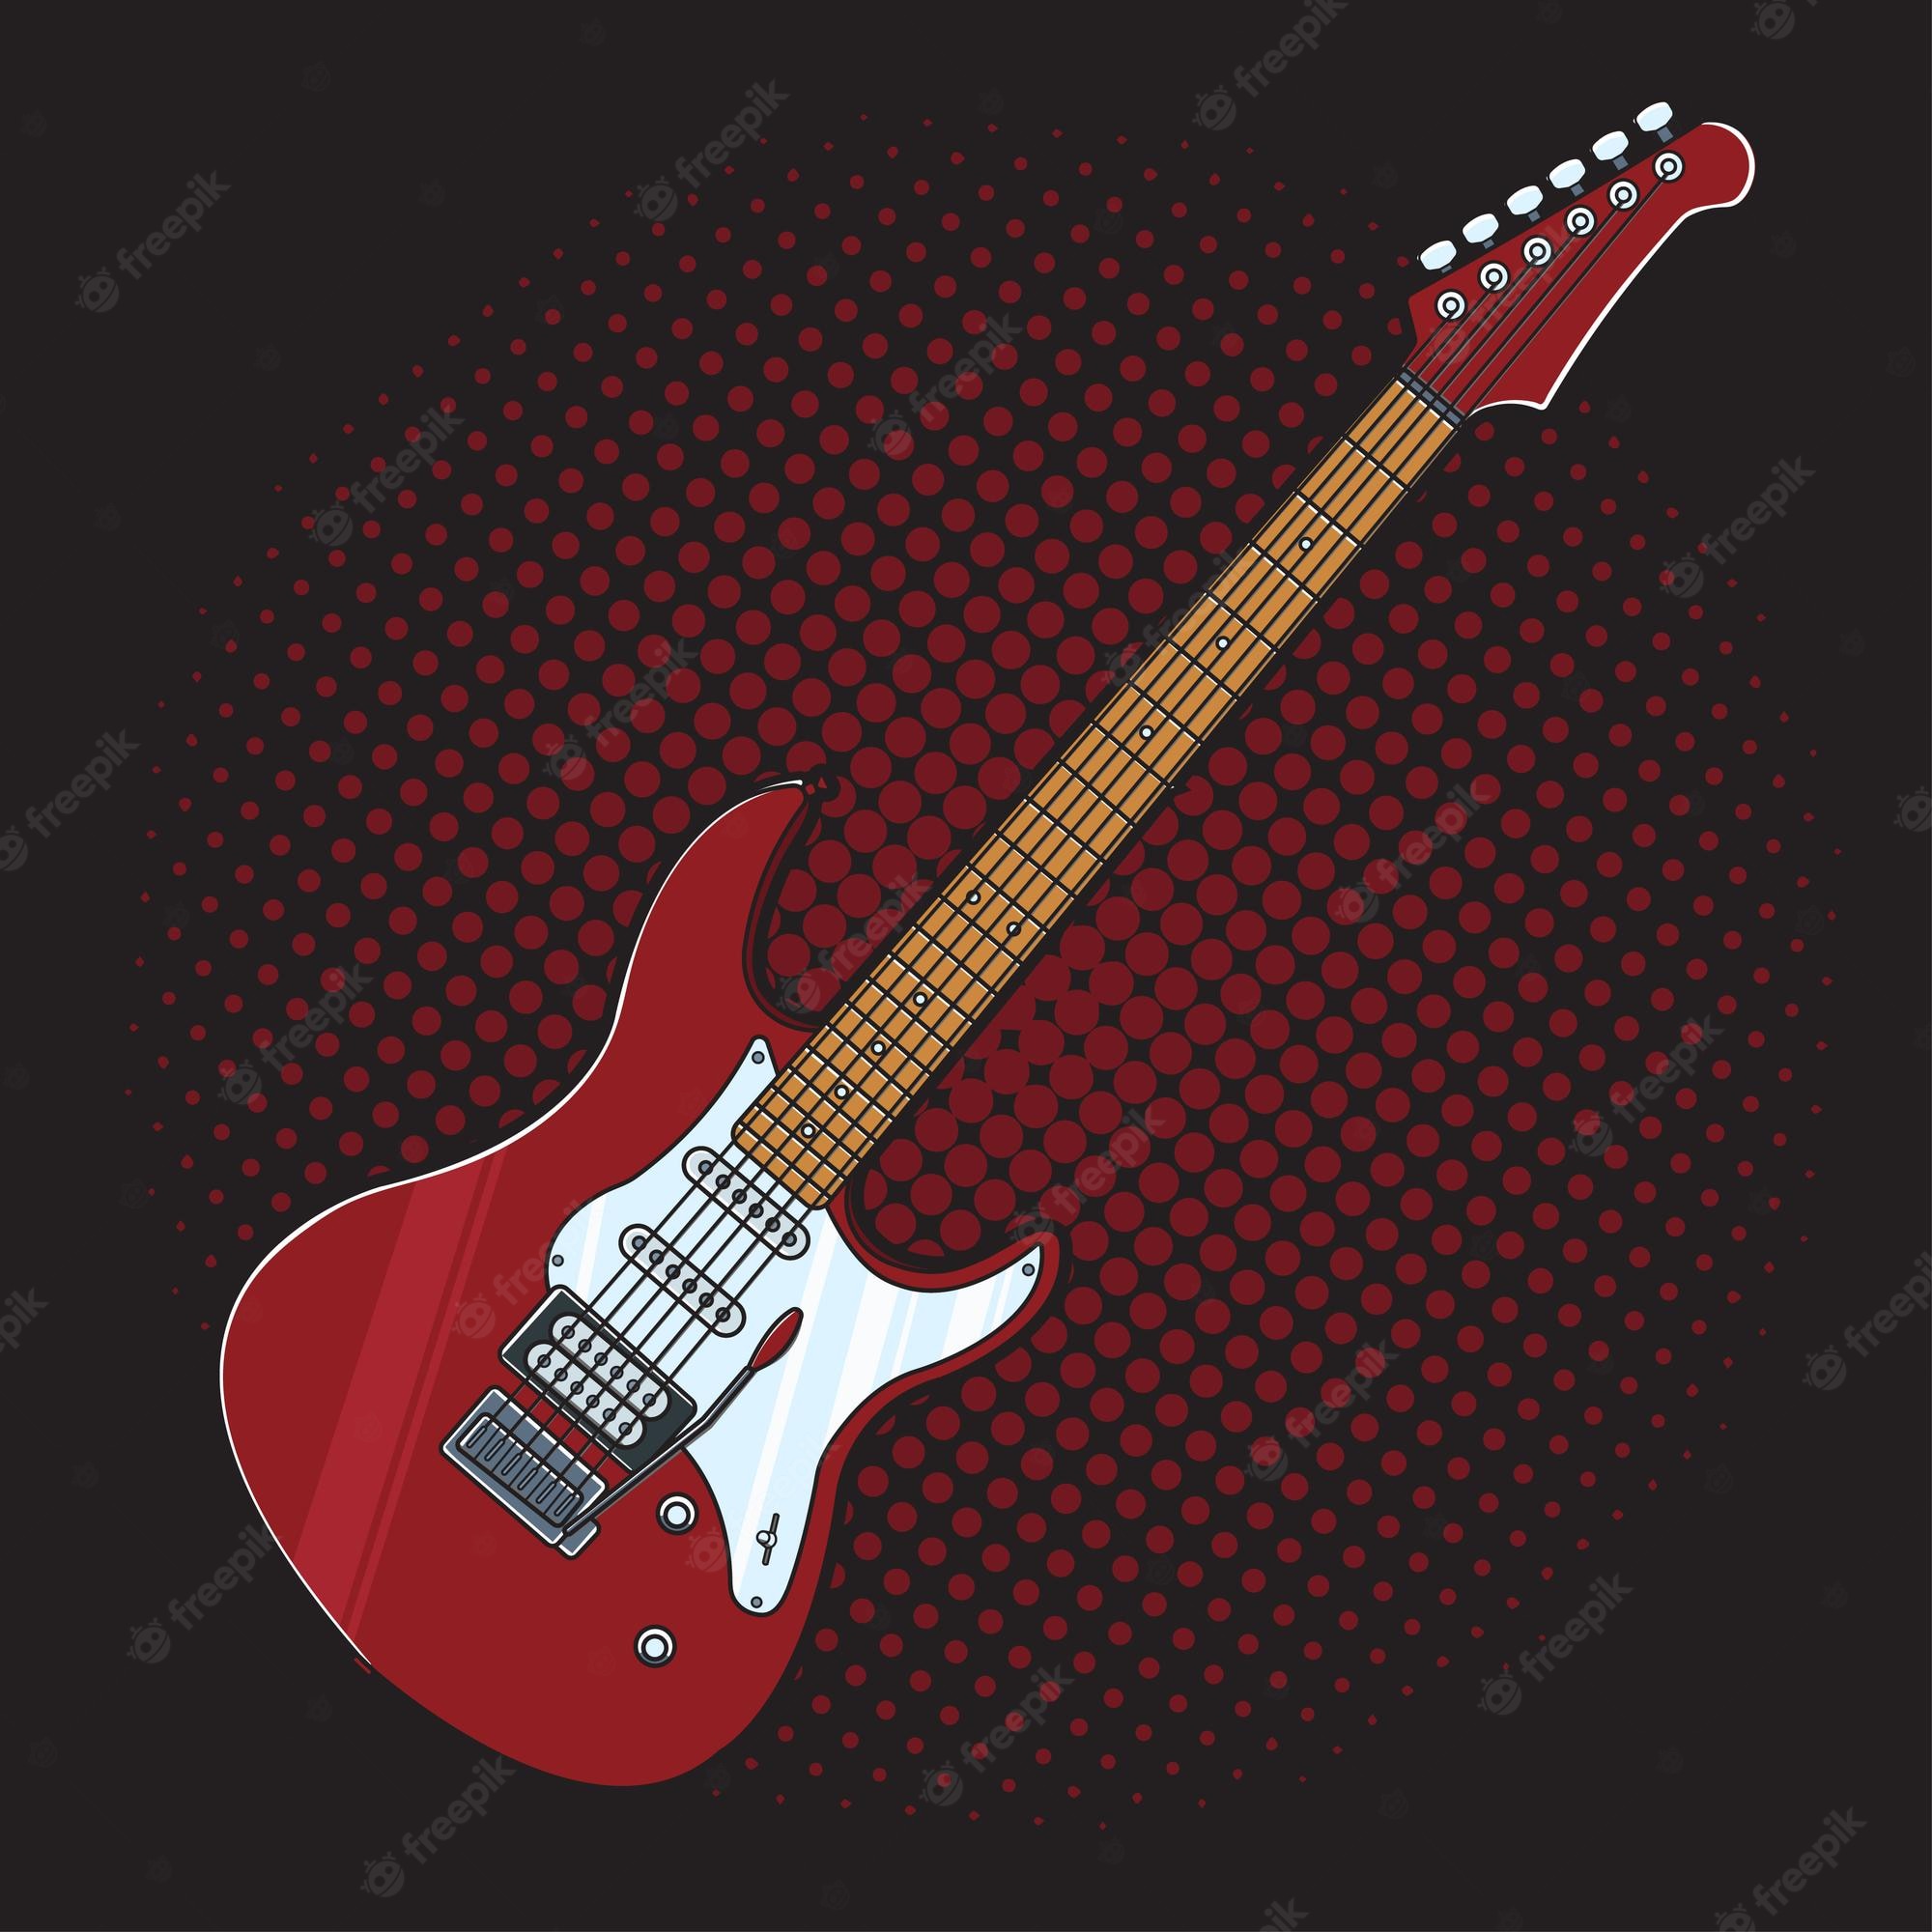 Premium Vector. Electric guitar vector illustration rock music instrument